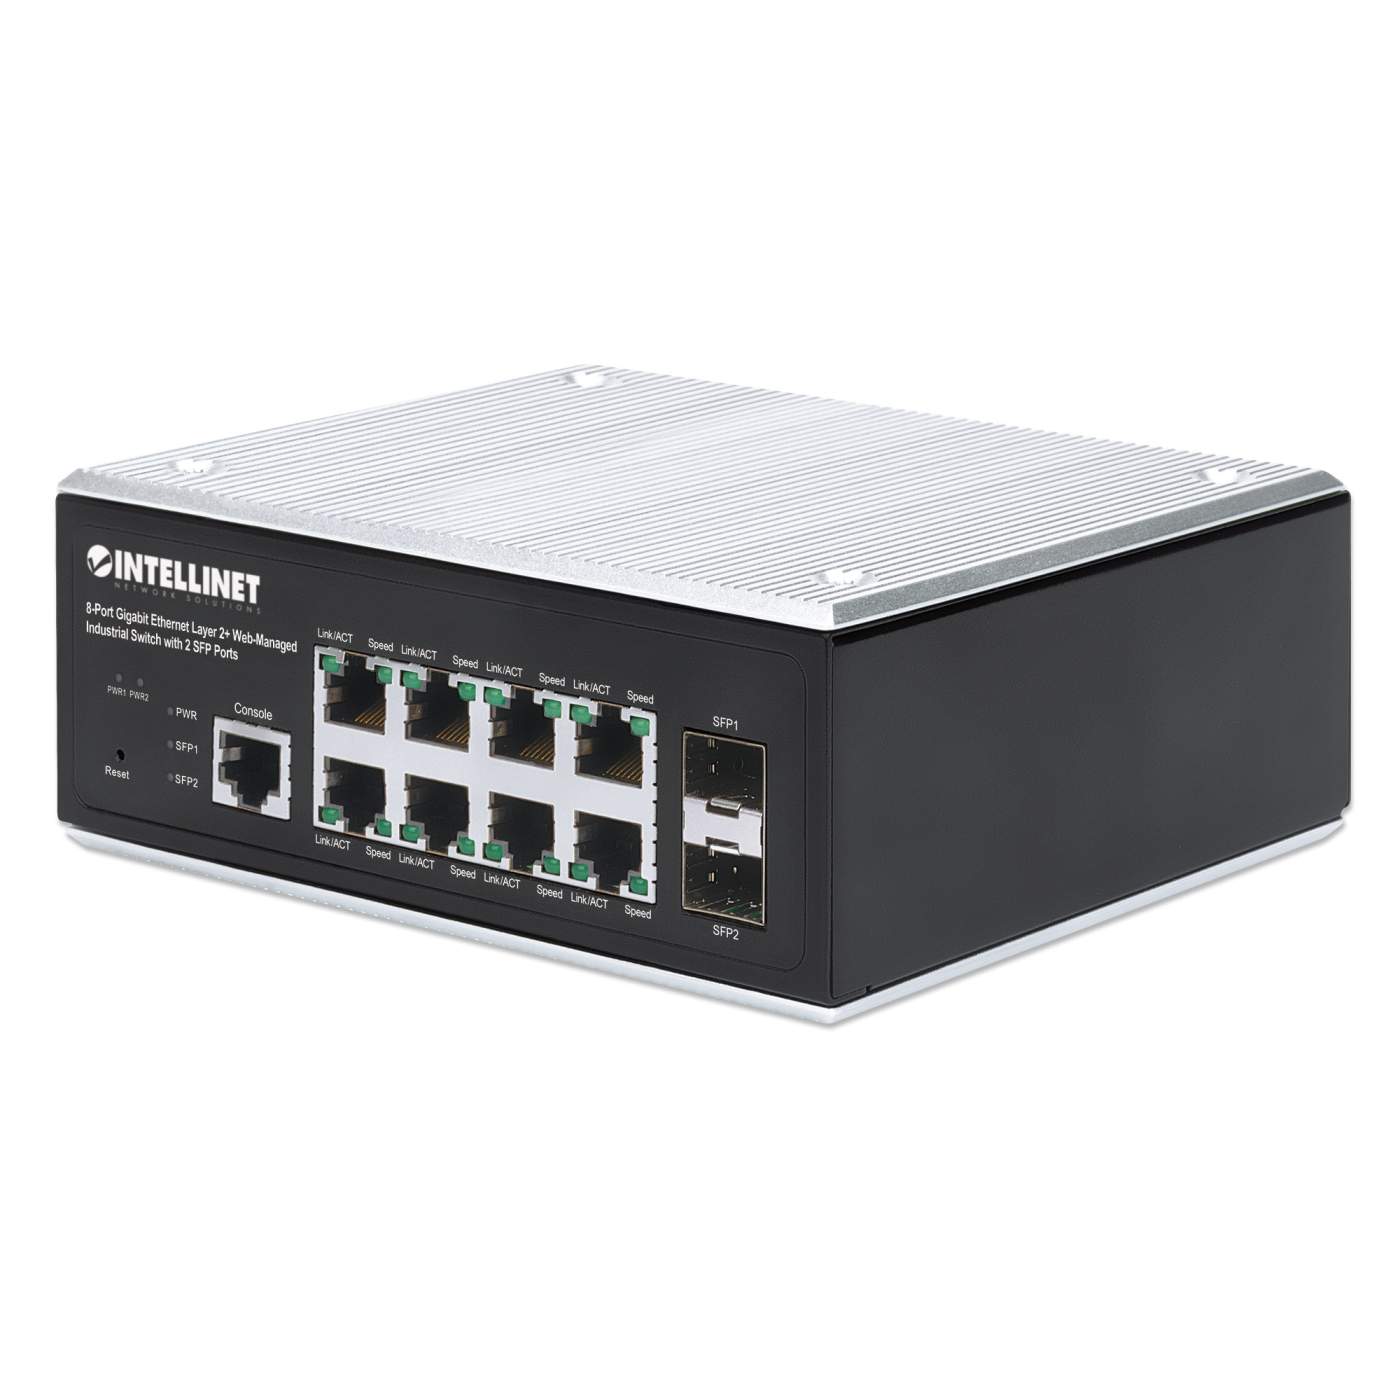 Intellinet Switch de Escritorio Gigabit Ethernet de 8 puertos (530347)